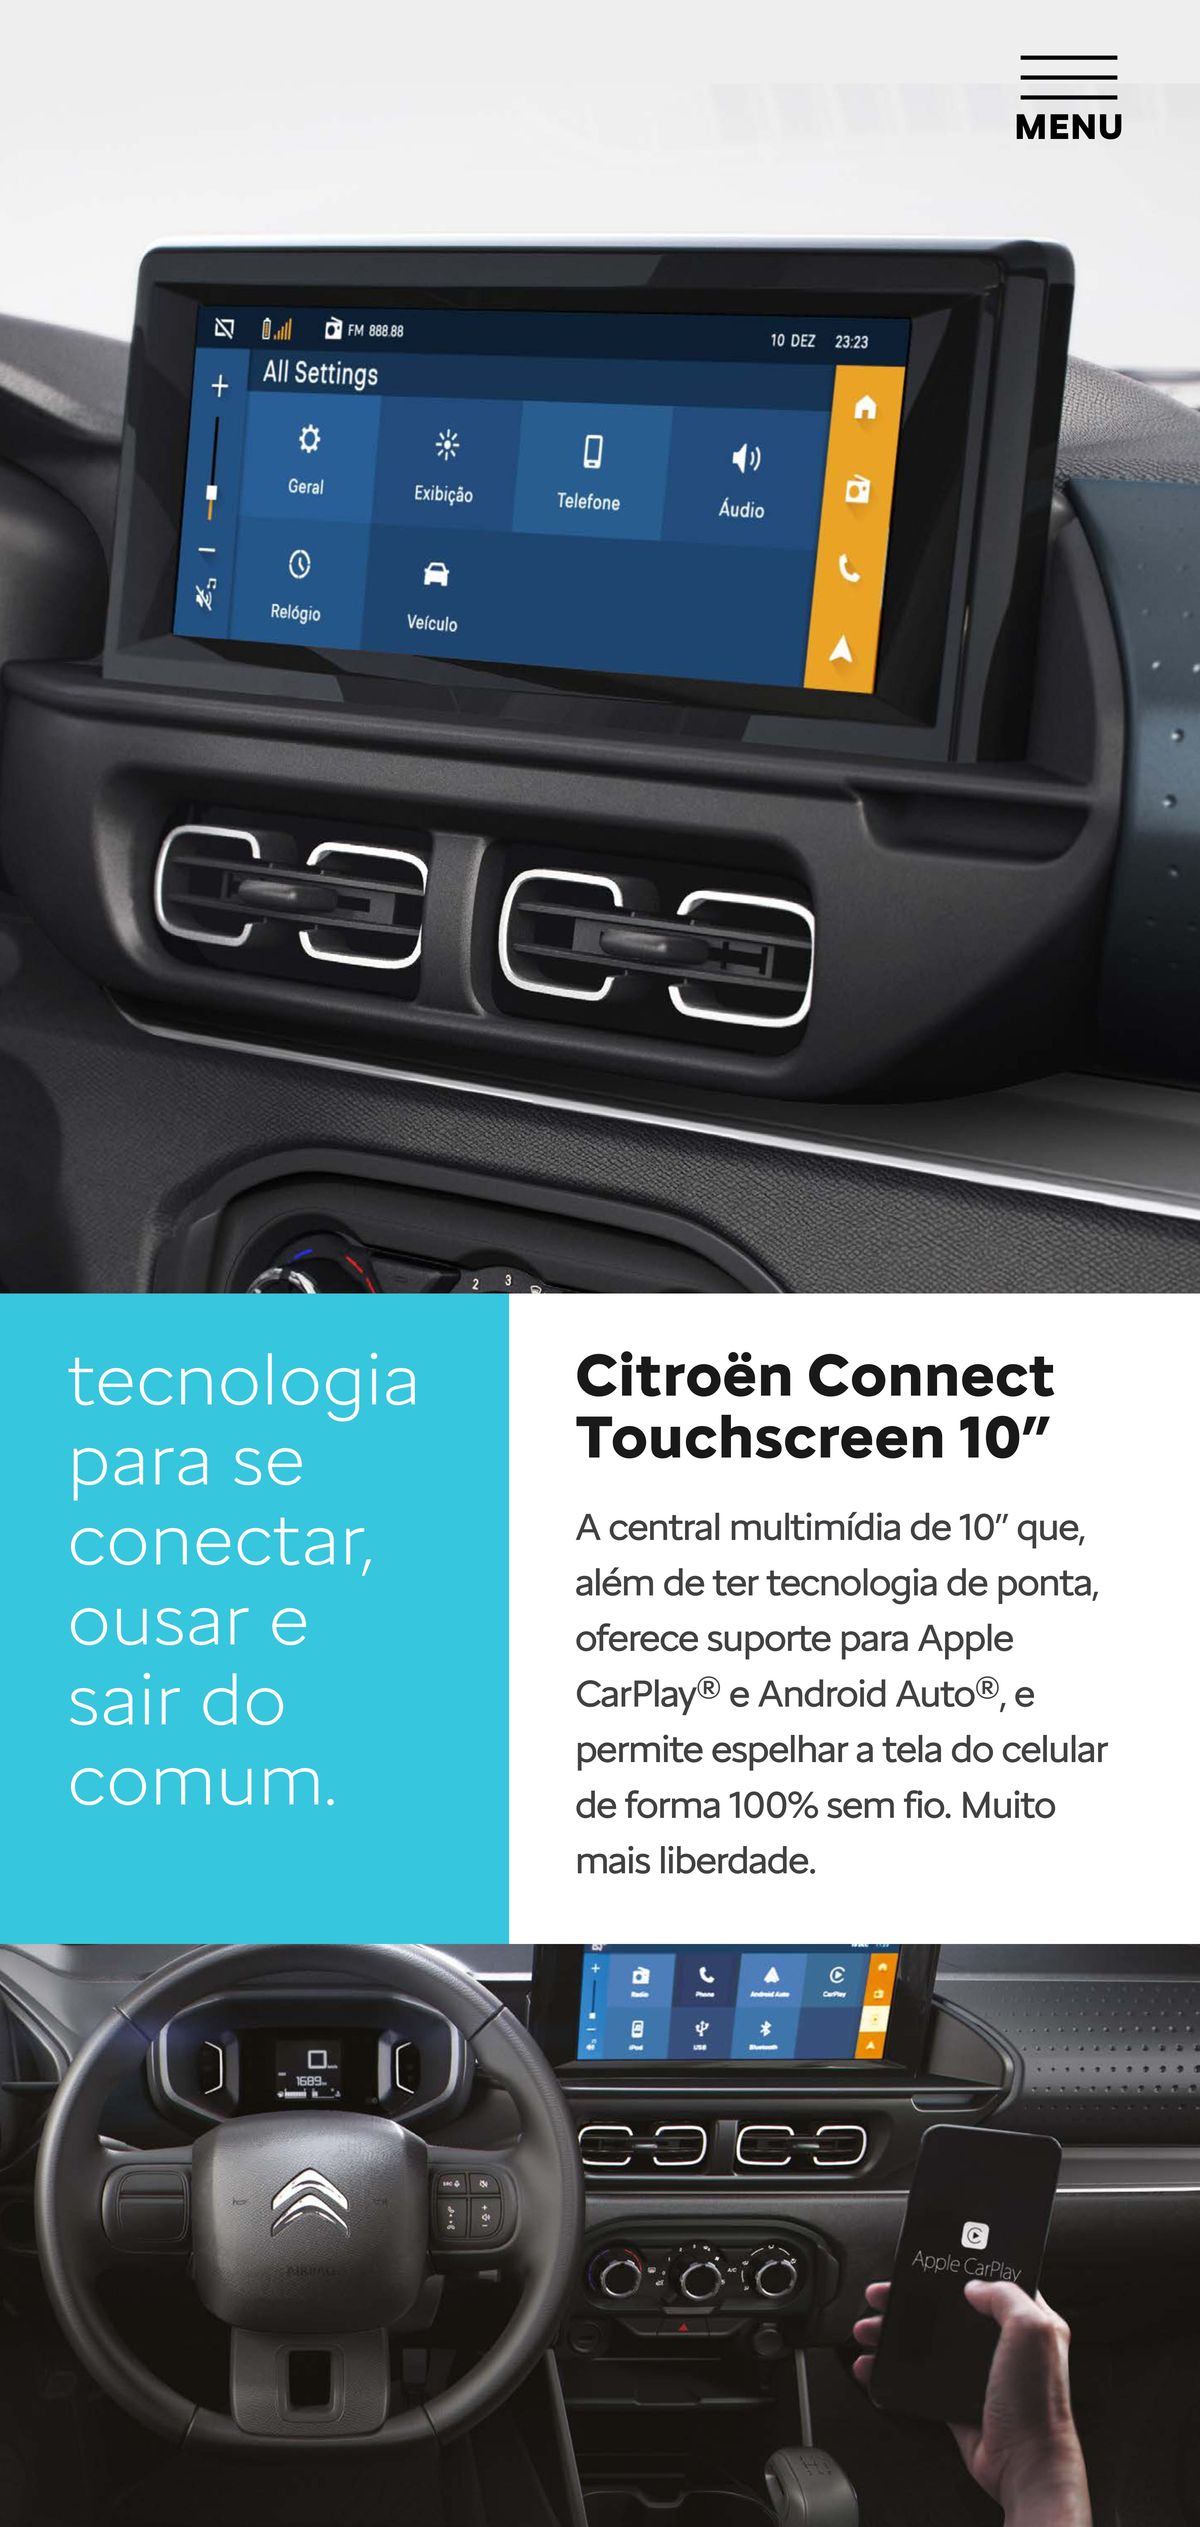 Tecnologia Citroën Connect para seu carro com desconto